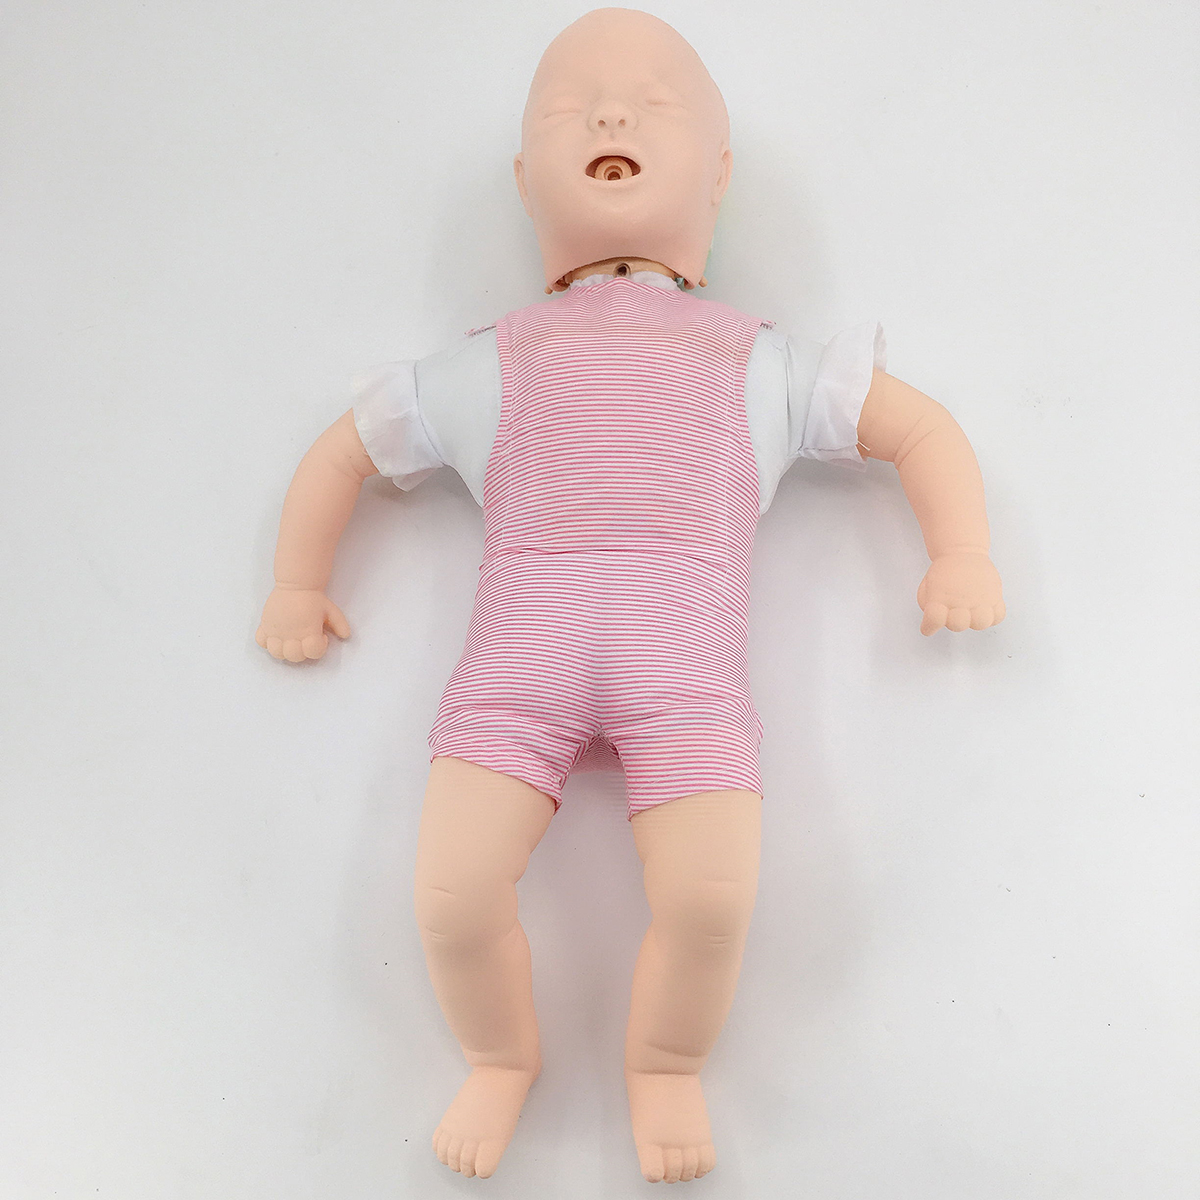 CPR-Reborn-Doll-Resusci-Infant-Training-Manikin-Model-With-Case-6-Airways-Set-1196358-4